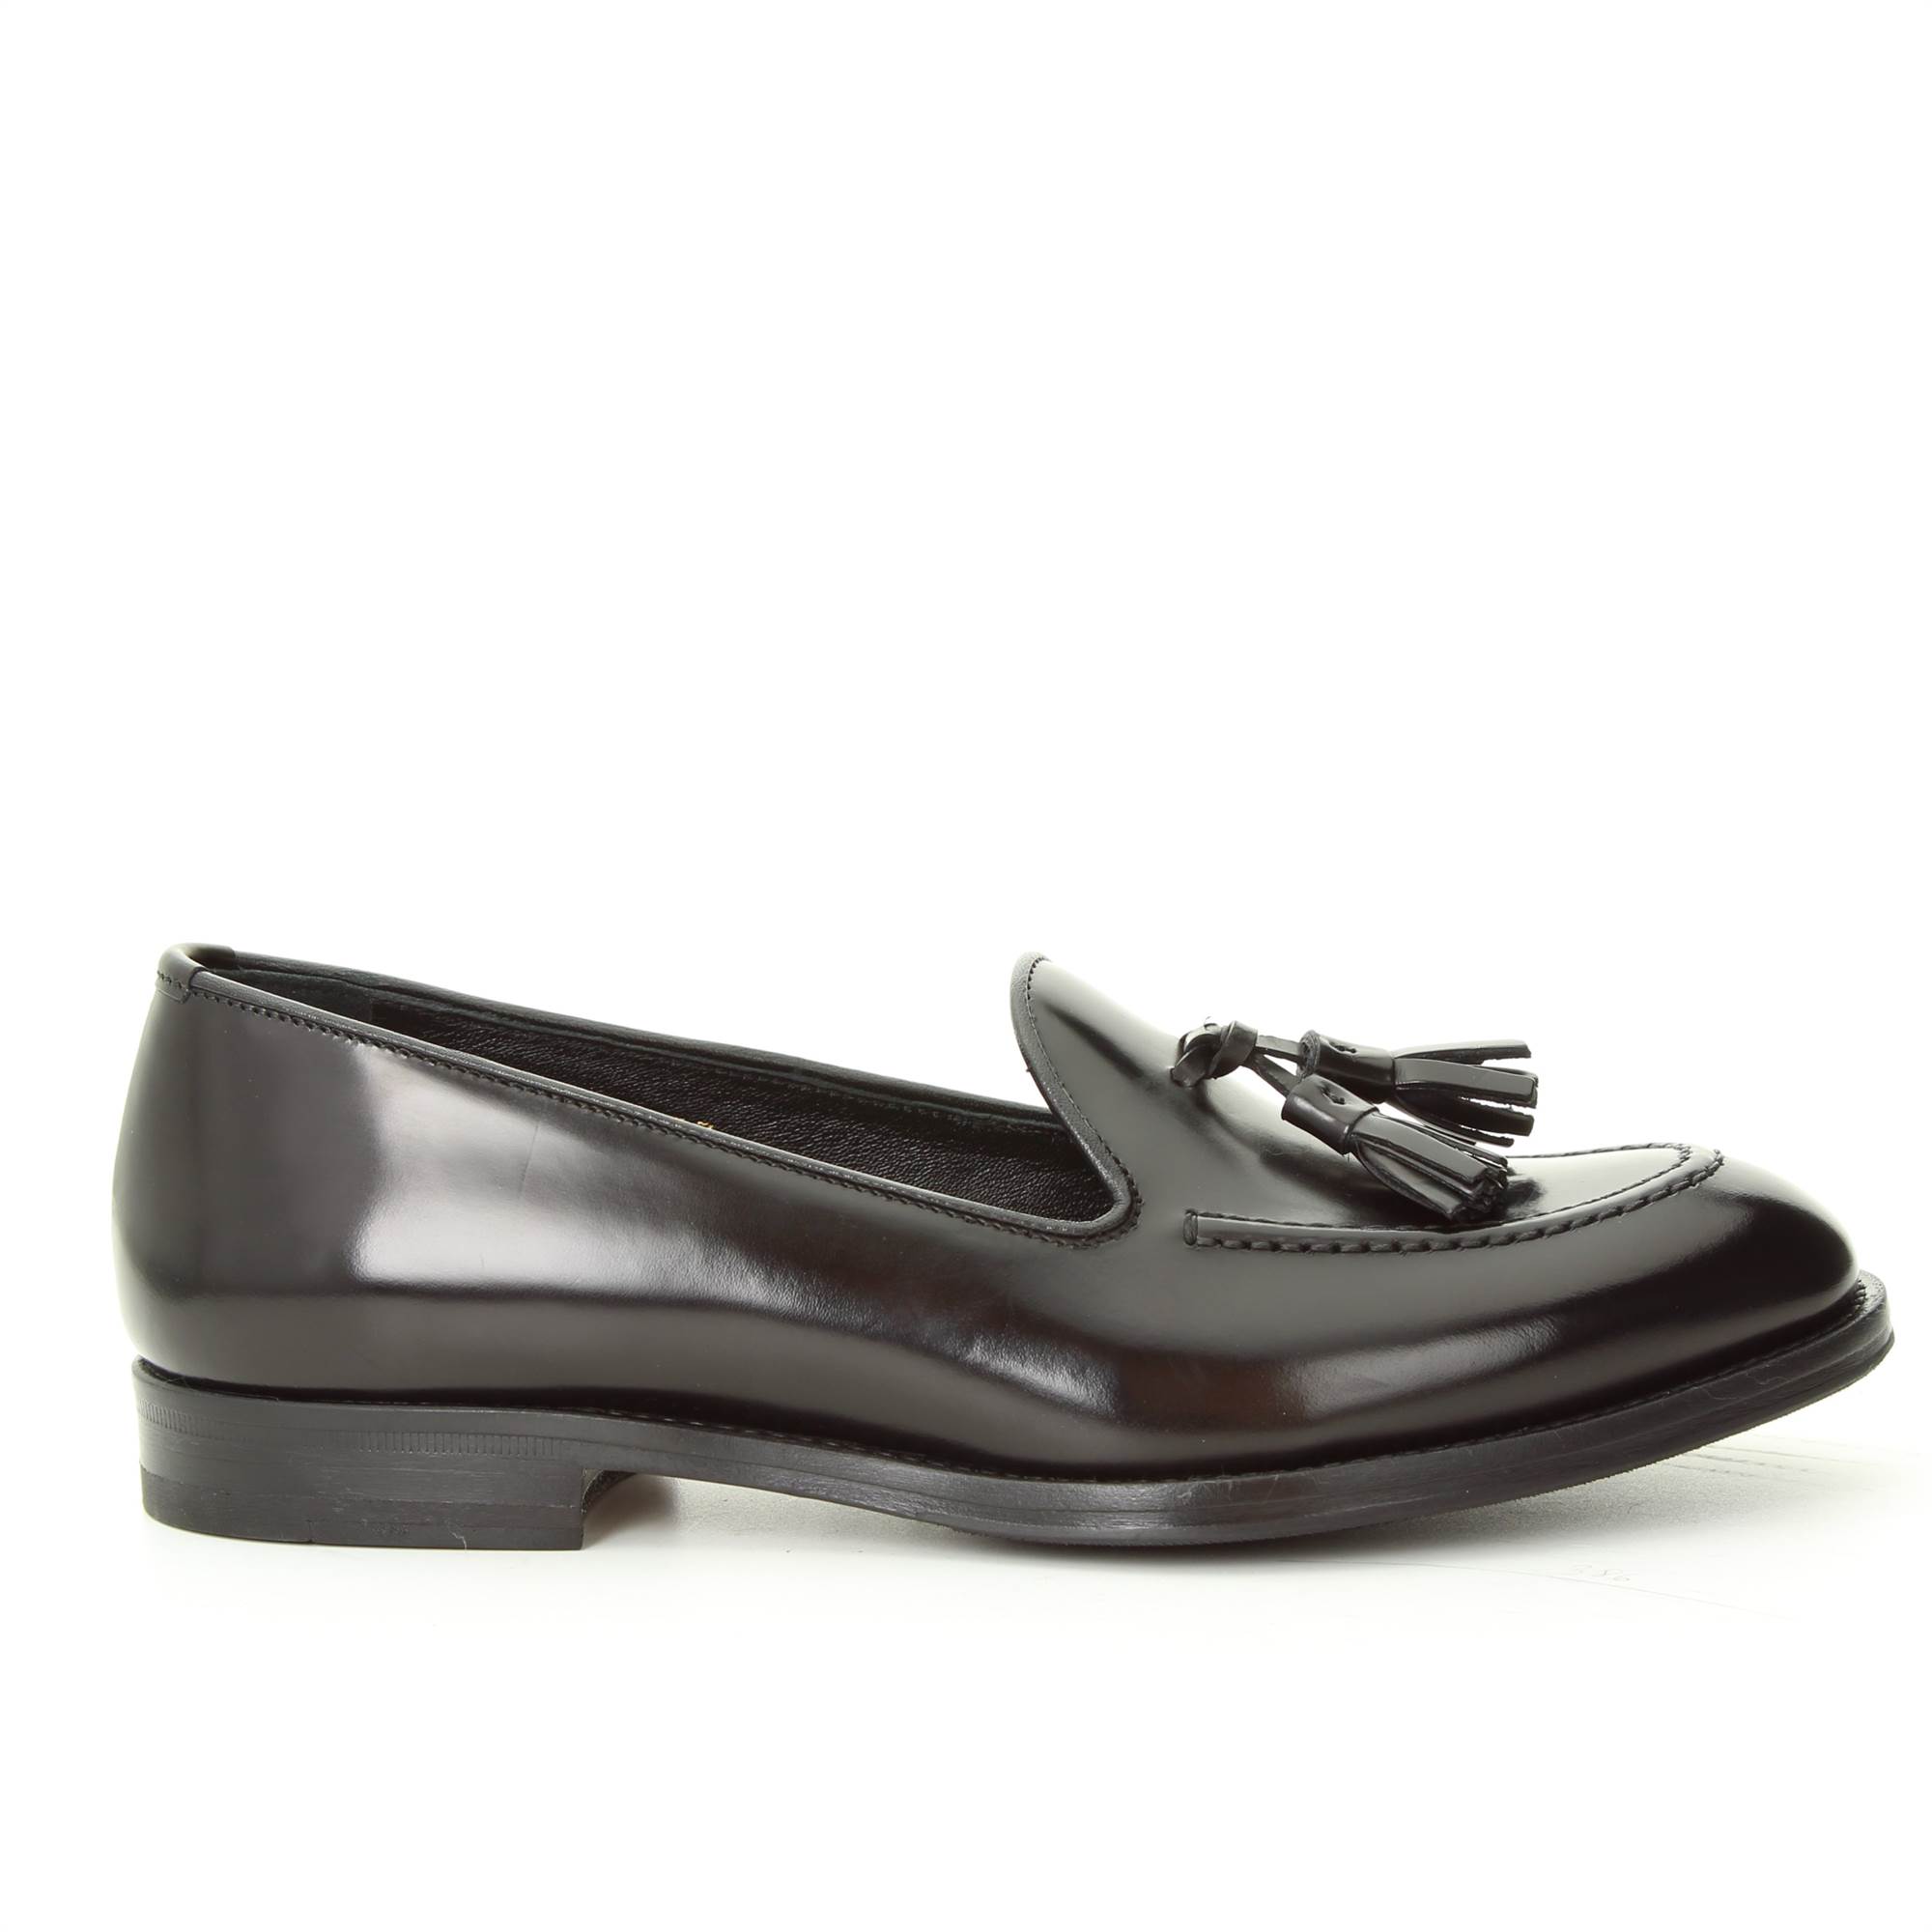 Vintage anni '50 Moccasin Slip su Tasselled Patent Leather Loafers Scarpe.Mod gemma Made in Japan.Near mint condition Original Size 5.5 to 6 Scarpe Calzature donna Scarpe senza lacci Mocassini 